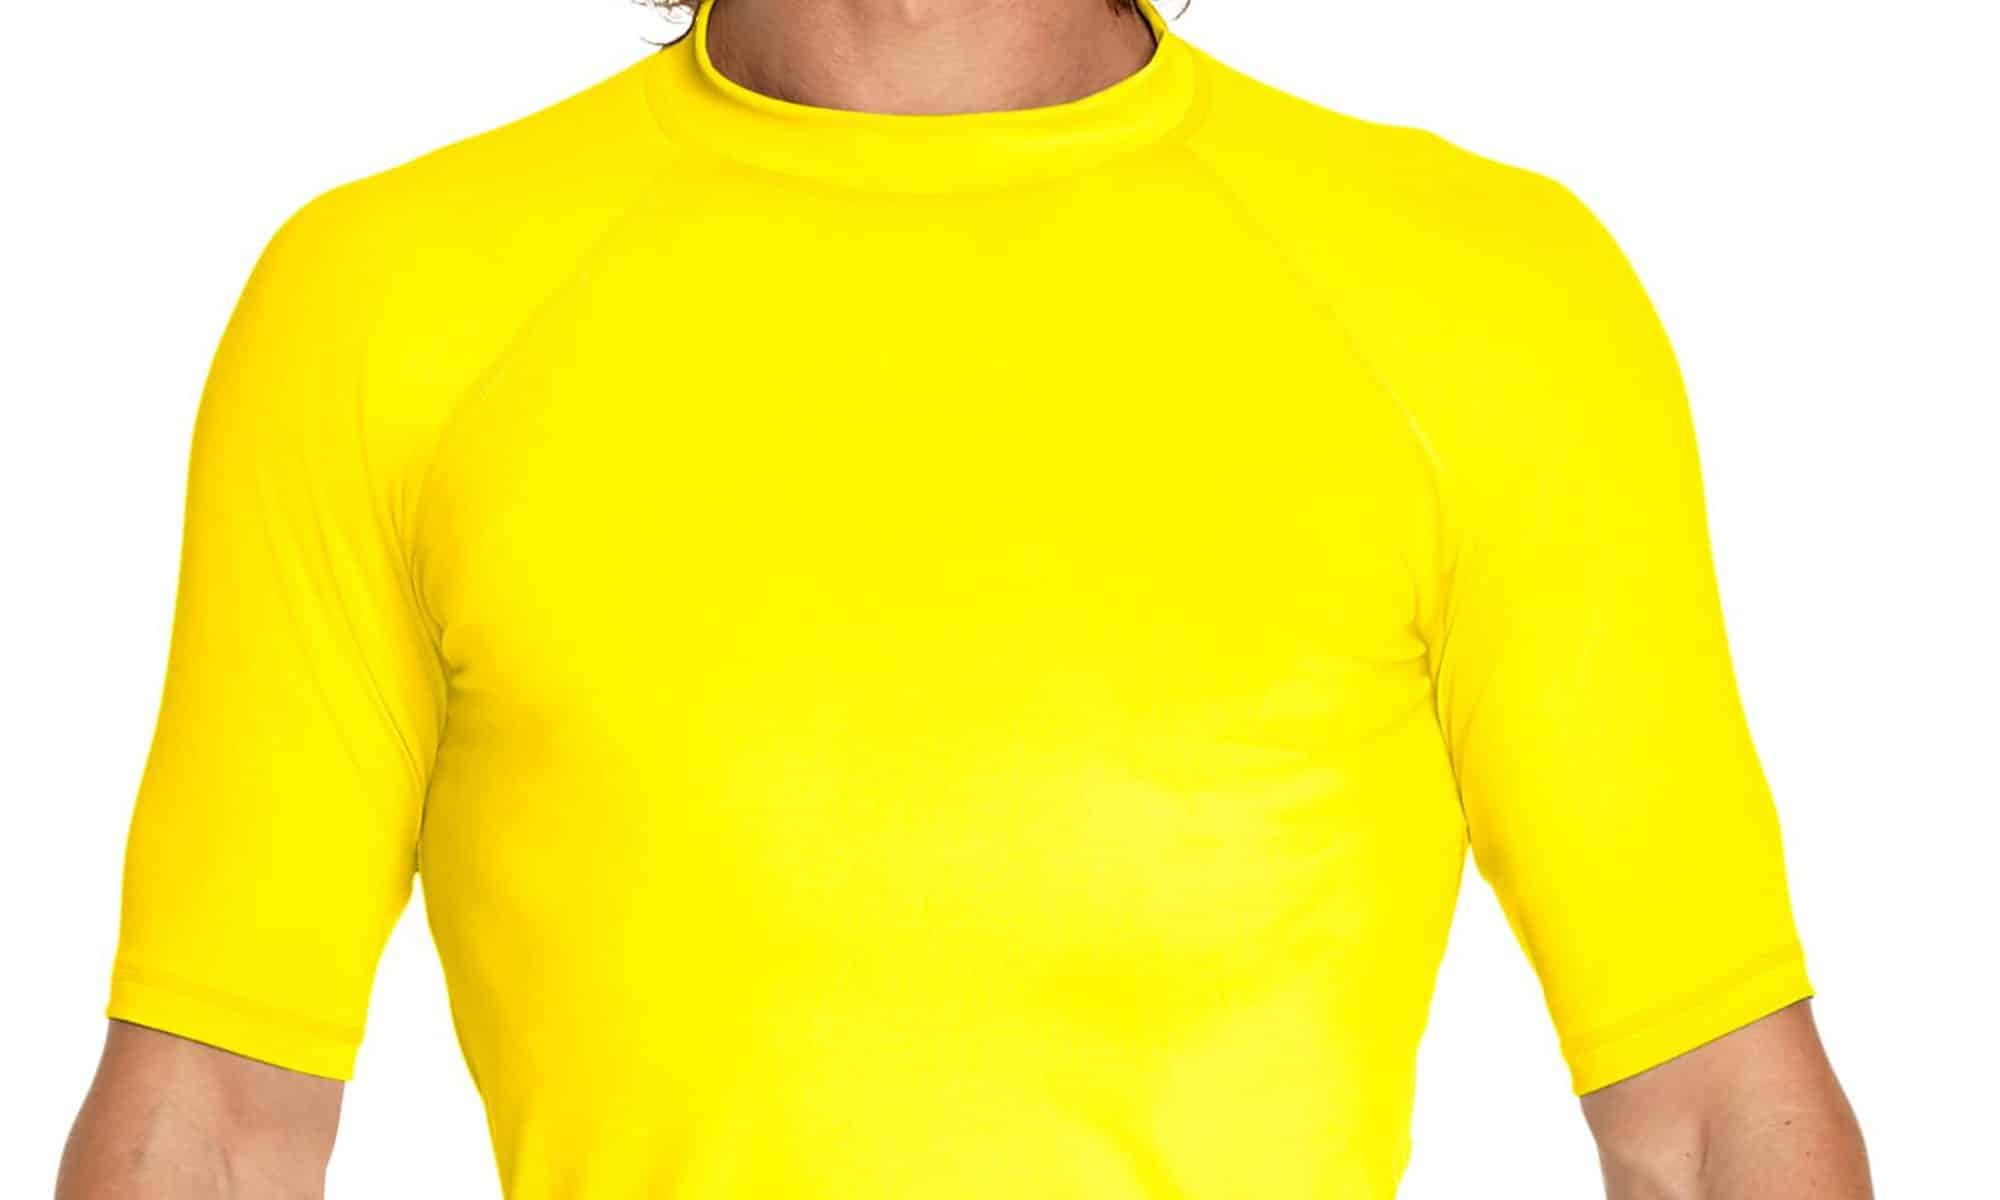 Rash Guard Short Sleeve - Yellow